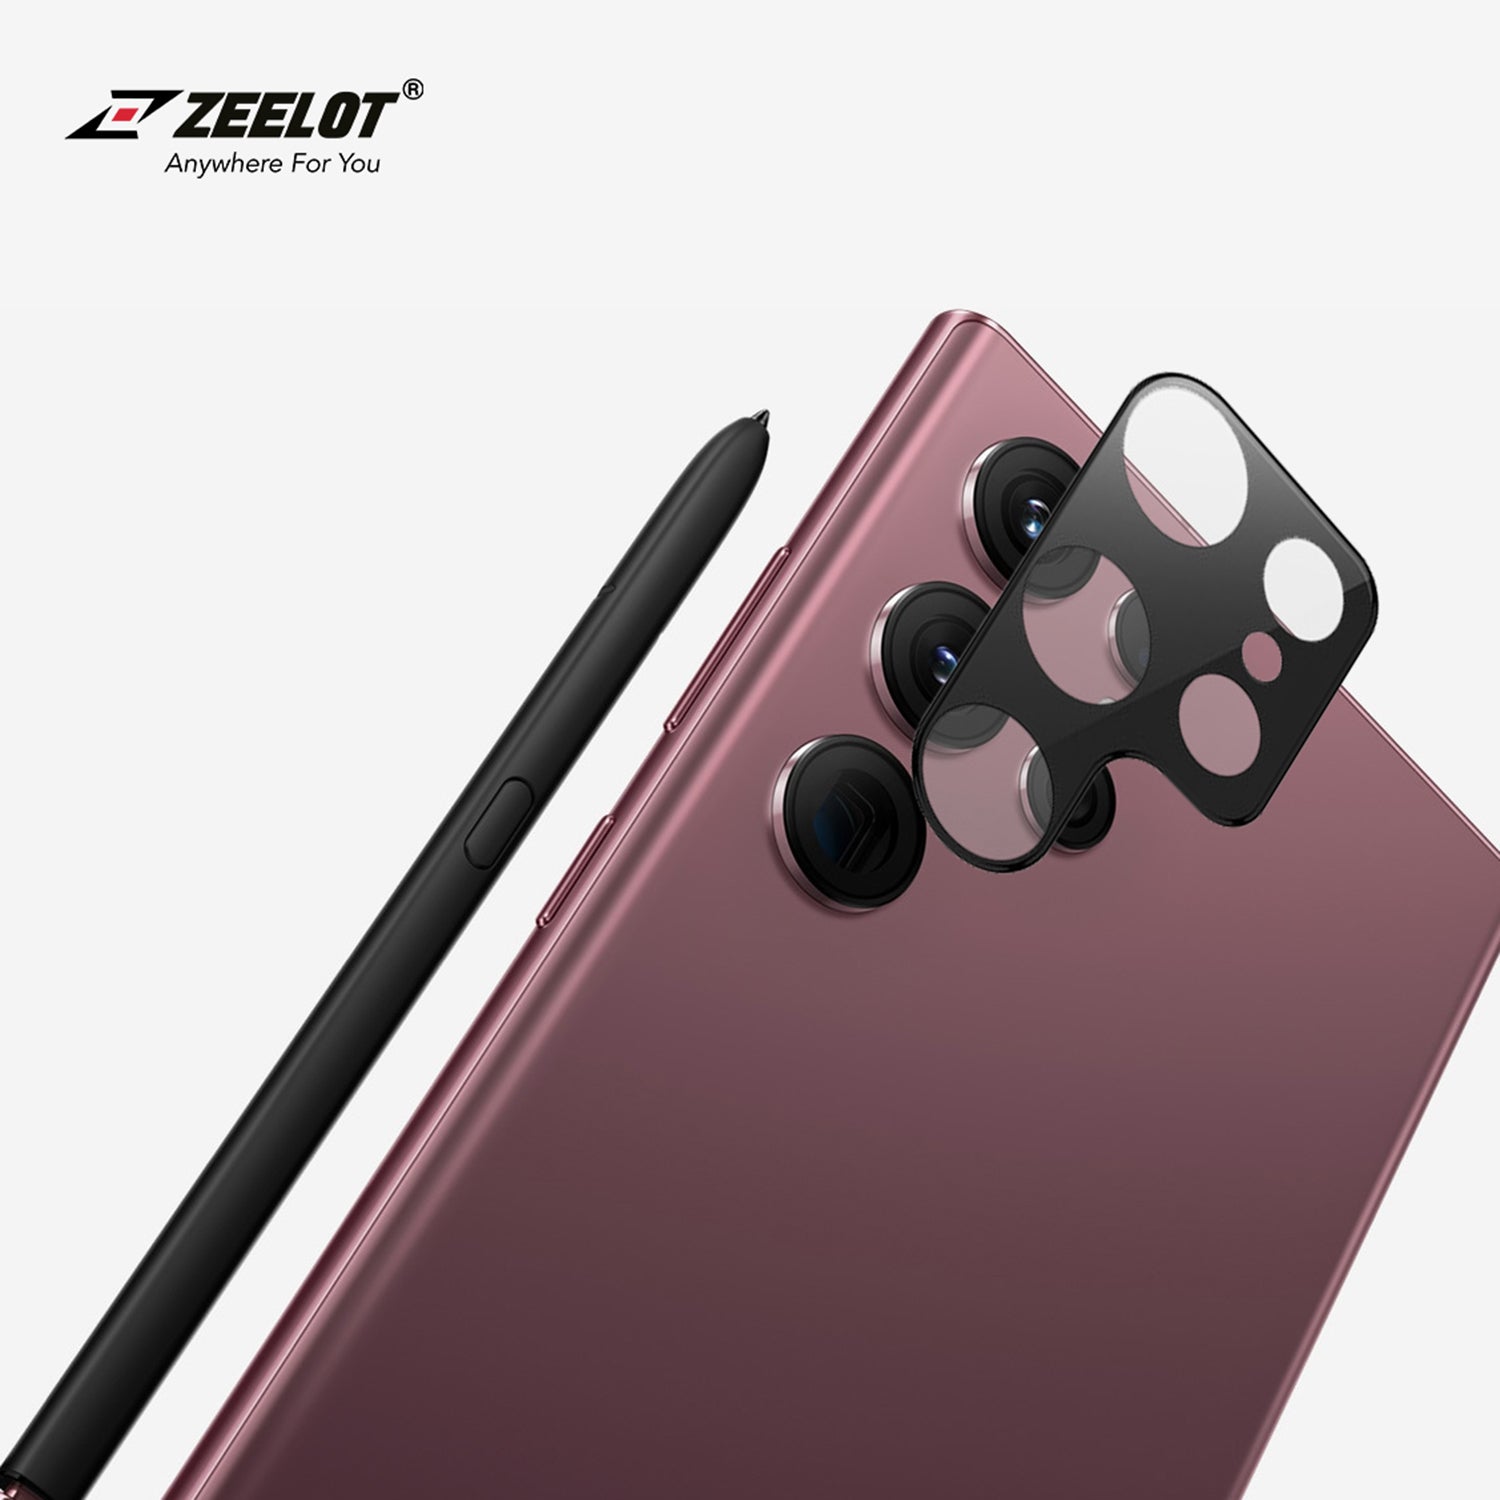 ZEELOT Integrated Camera Lens Protector for Samsung Galaxy S22 Ultra, Black Default ZEELOT 